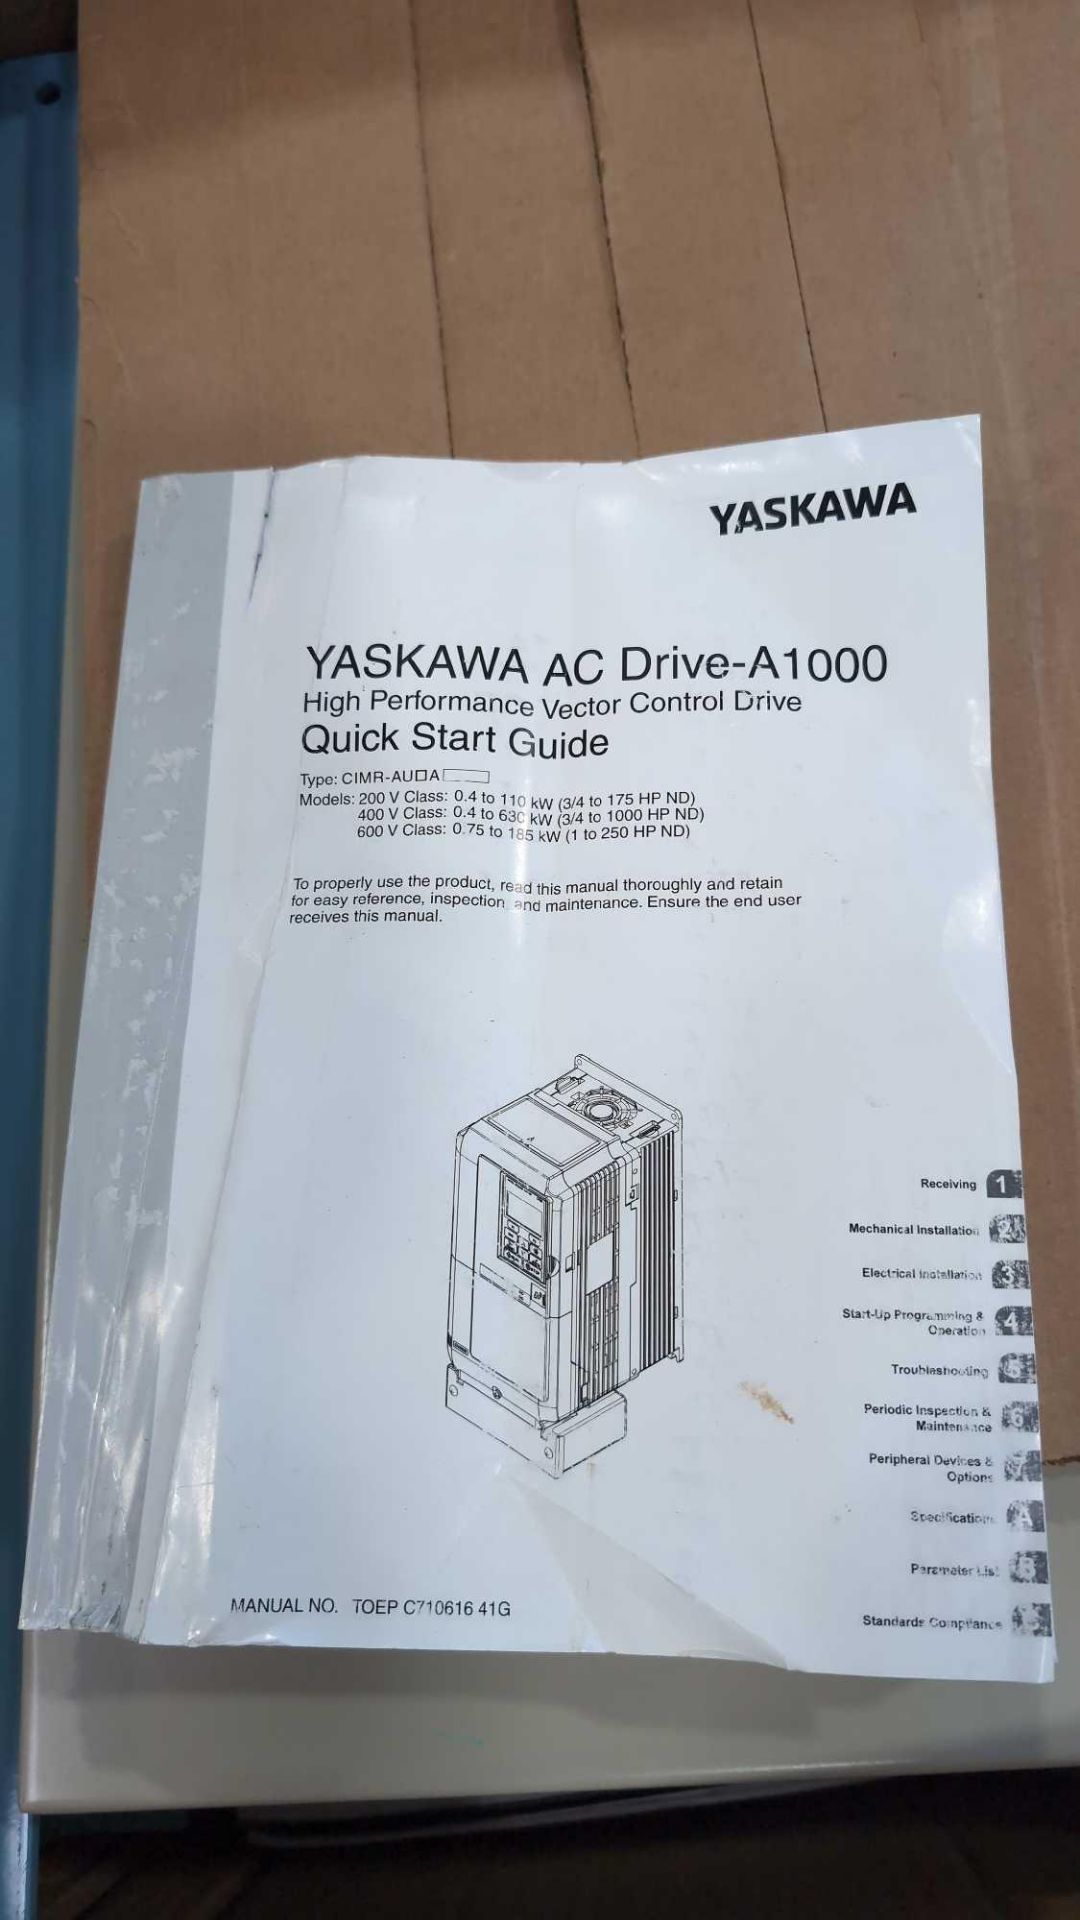 yaskawa ac drive a1000 high performance Vector Control Drive - Image 2 of 5